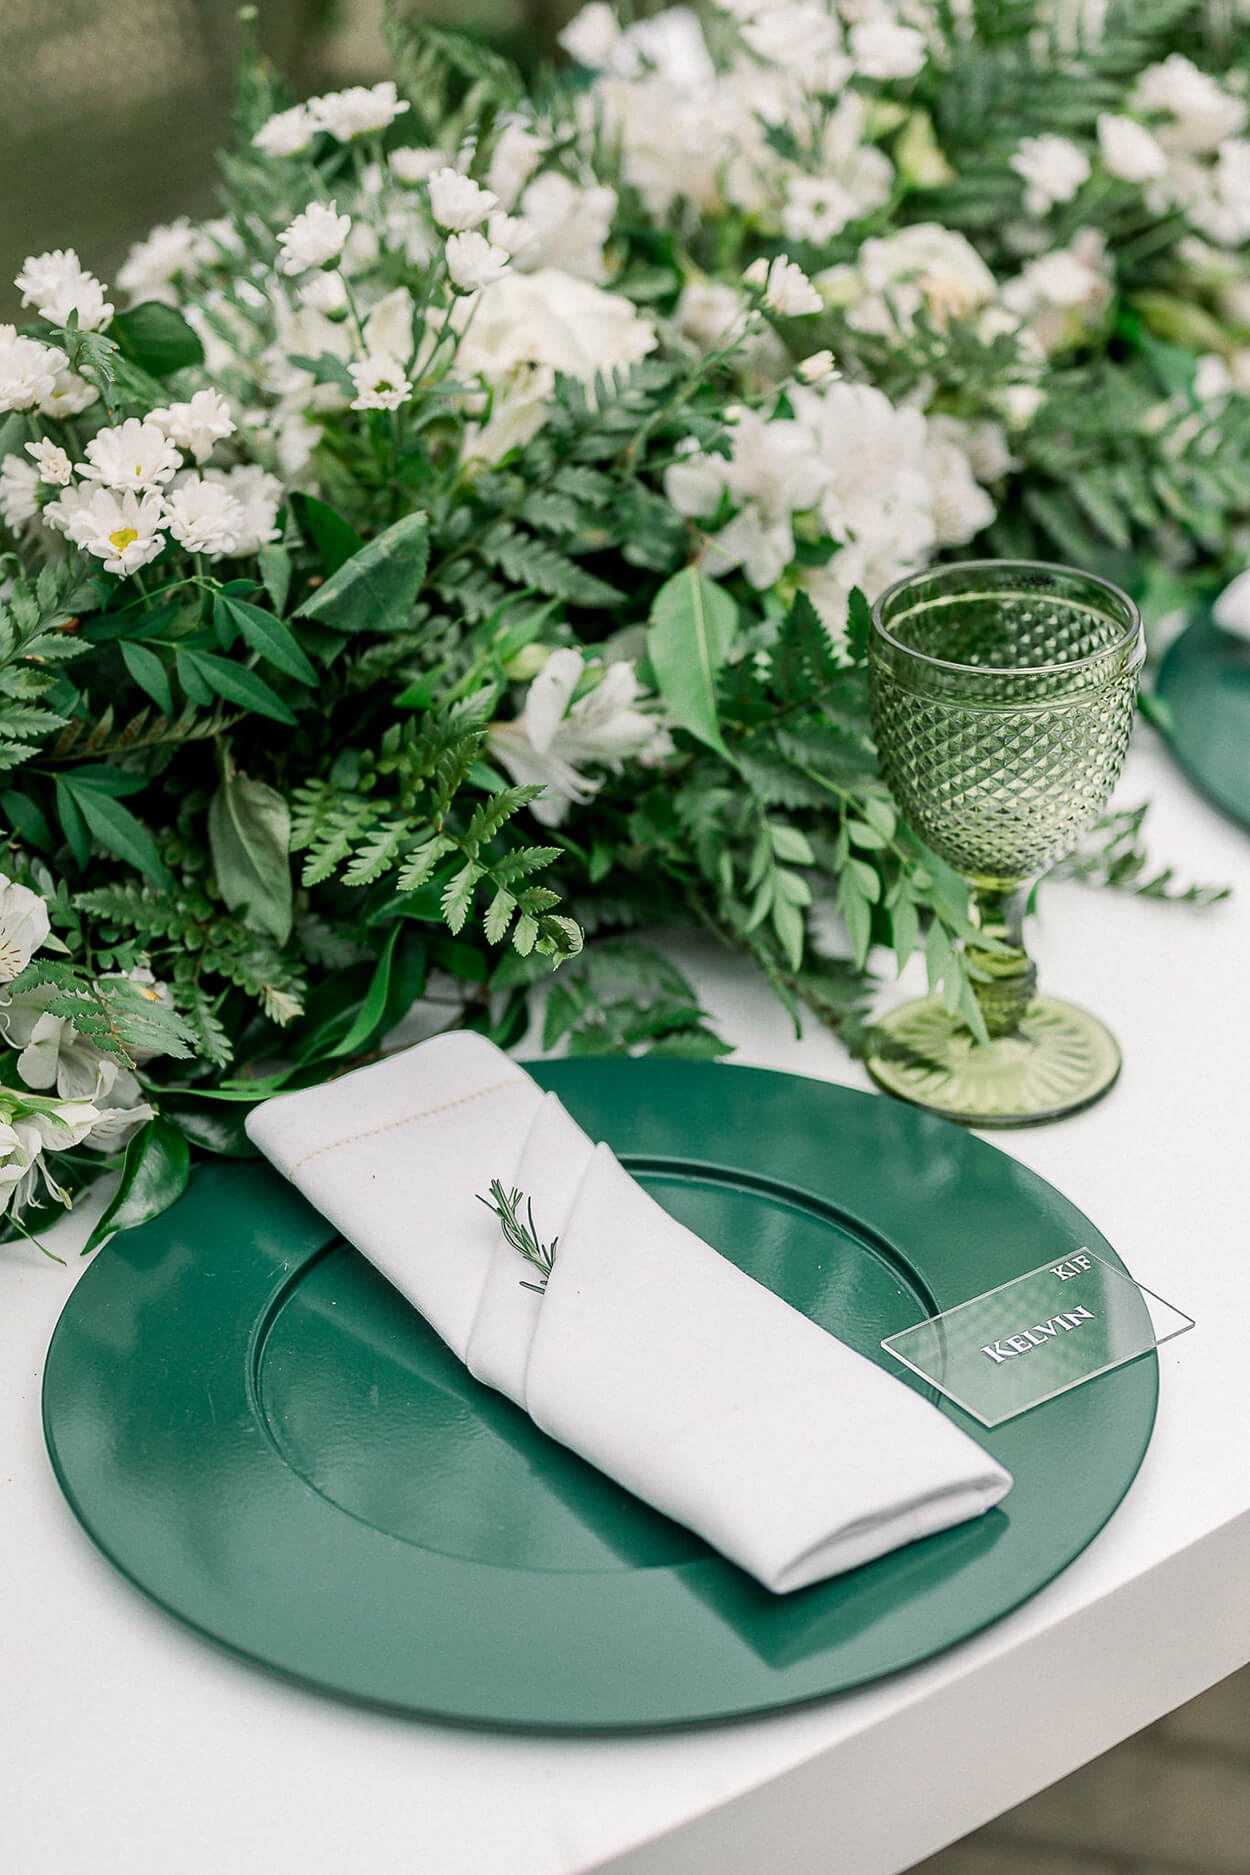 sousplat verde esmeralda com guardanapo branco e flores brancas ao centro